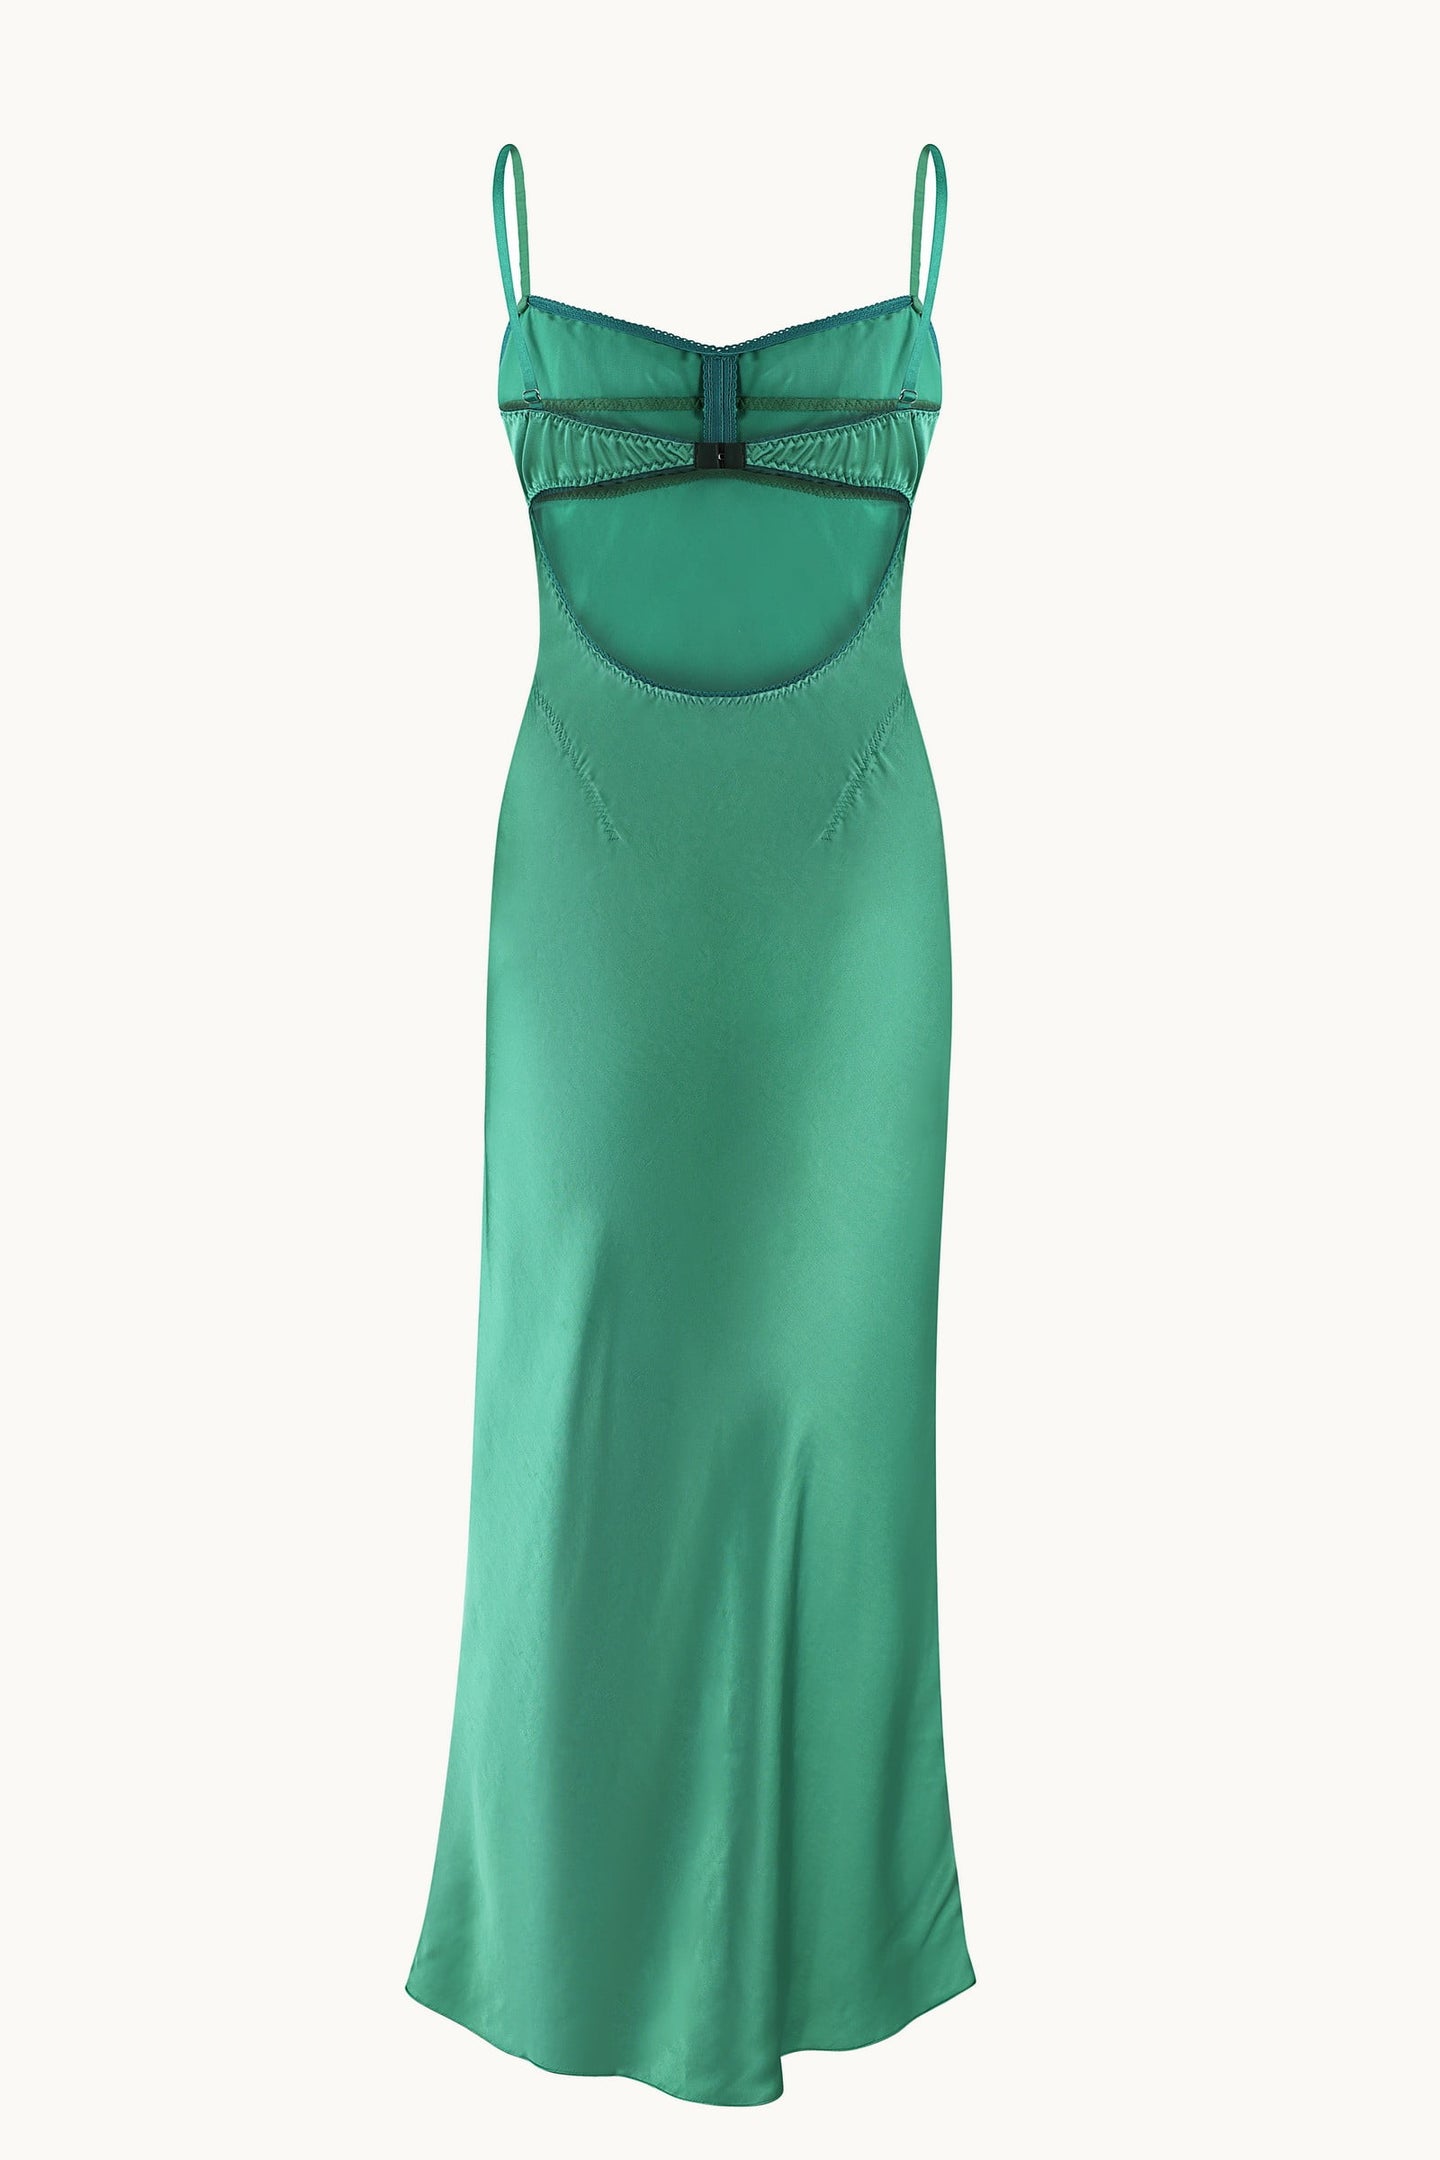 Model in green Waterlily dress back view